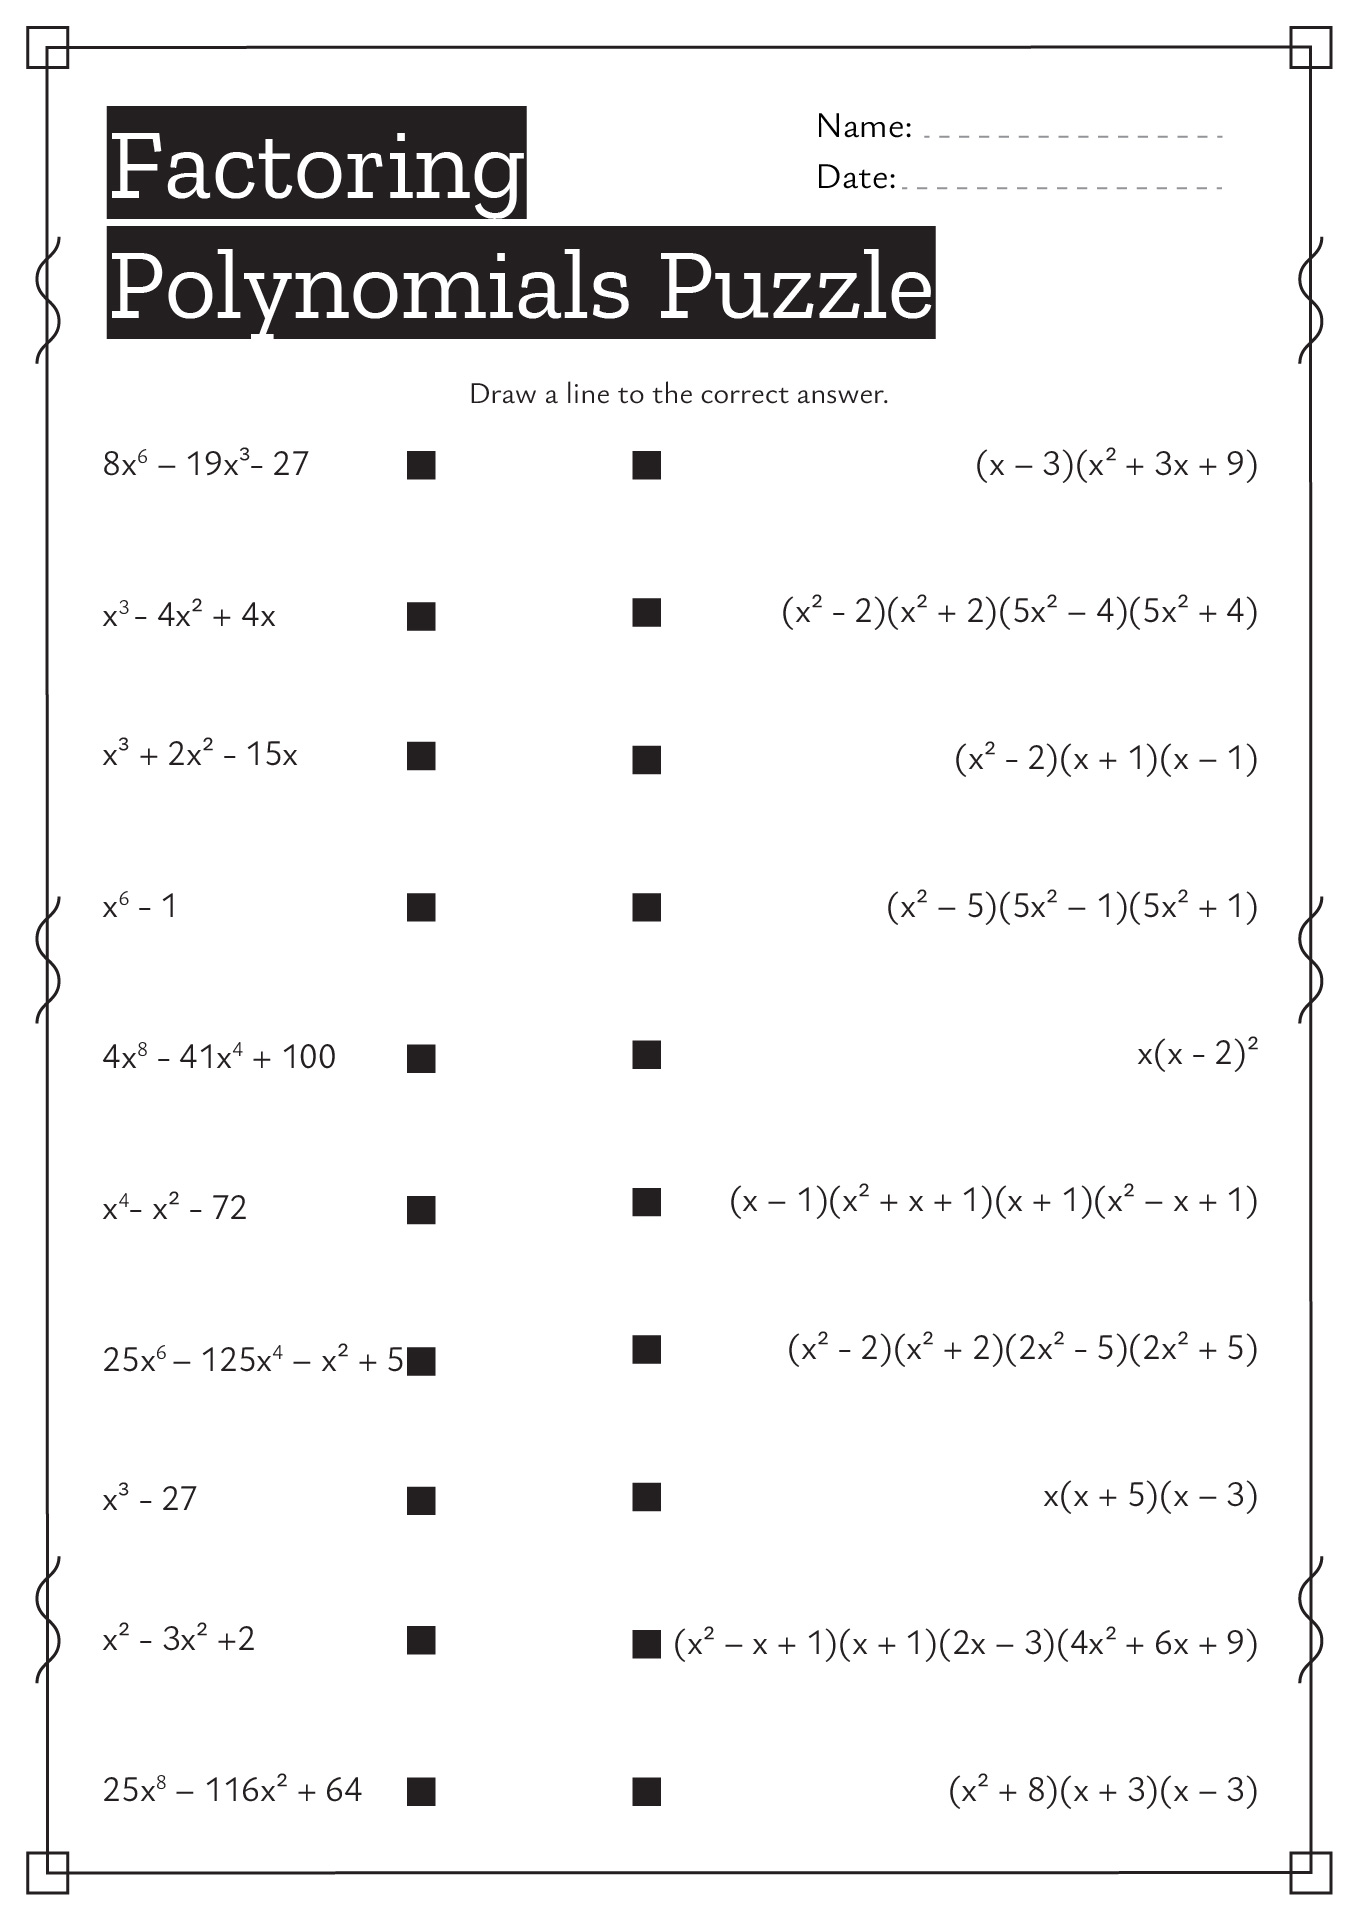 Factoring Polynomials Worksheet Puzzle